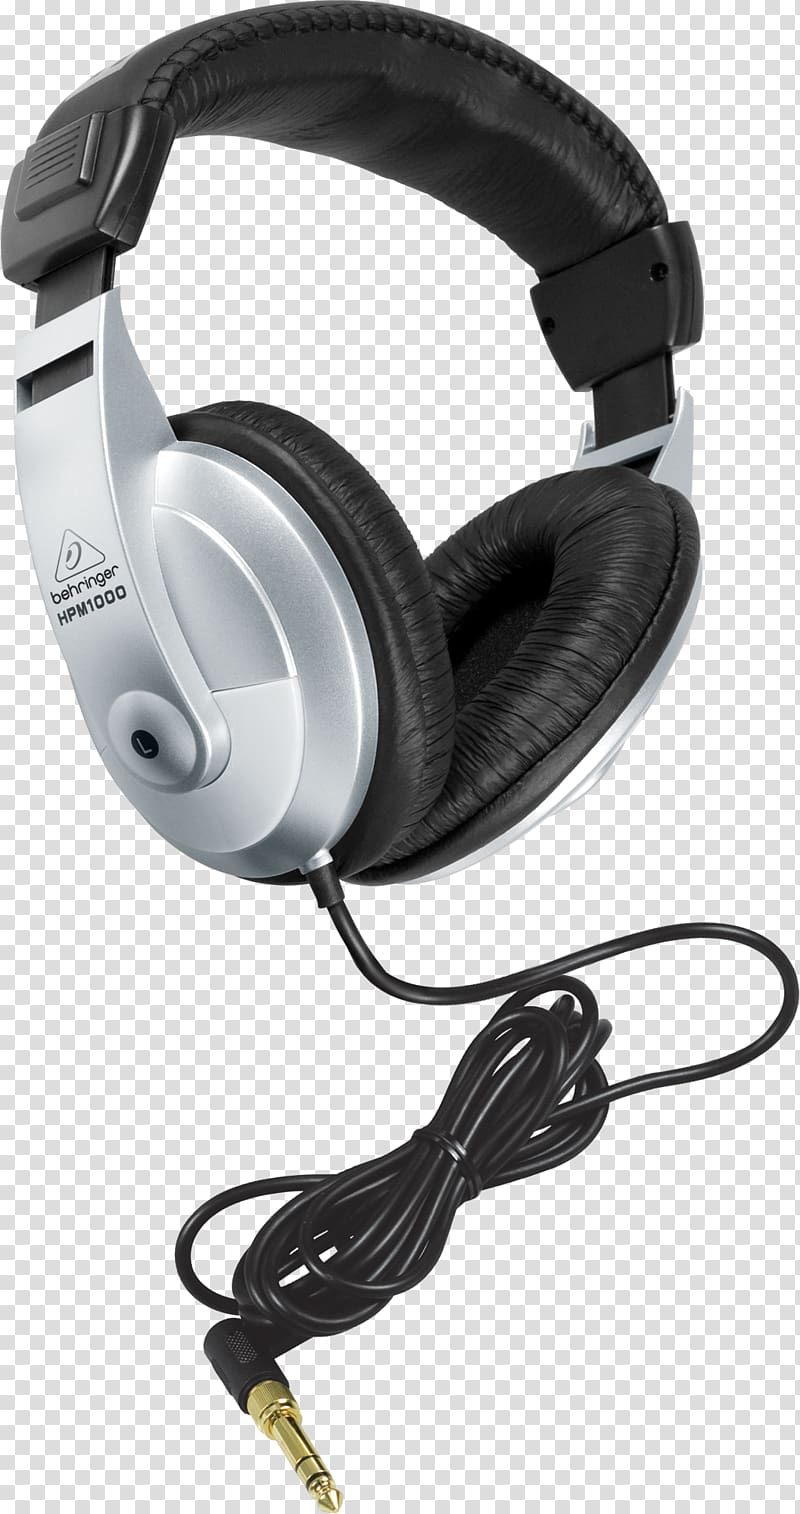 Recording studio BEHRINGER HPM1000 Disc jockey Headphones, headphones transparent background PNG clipart